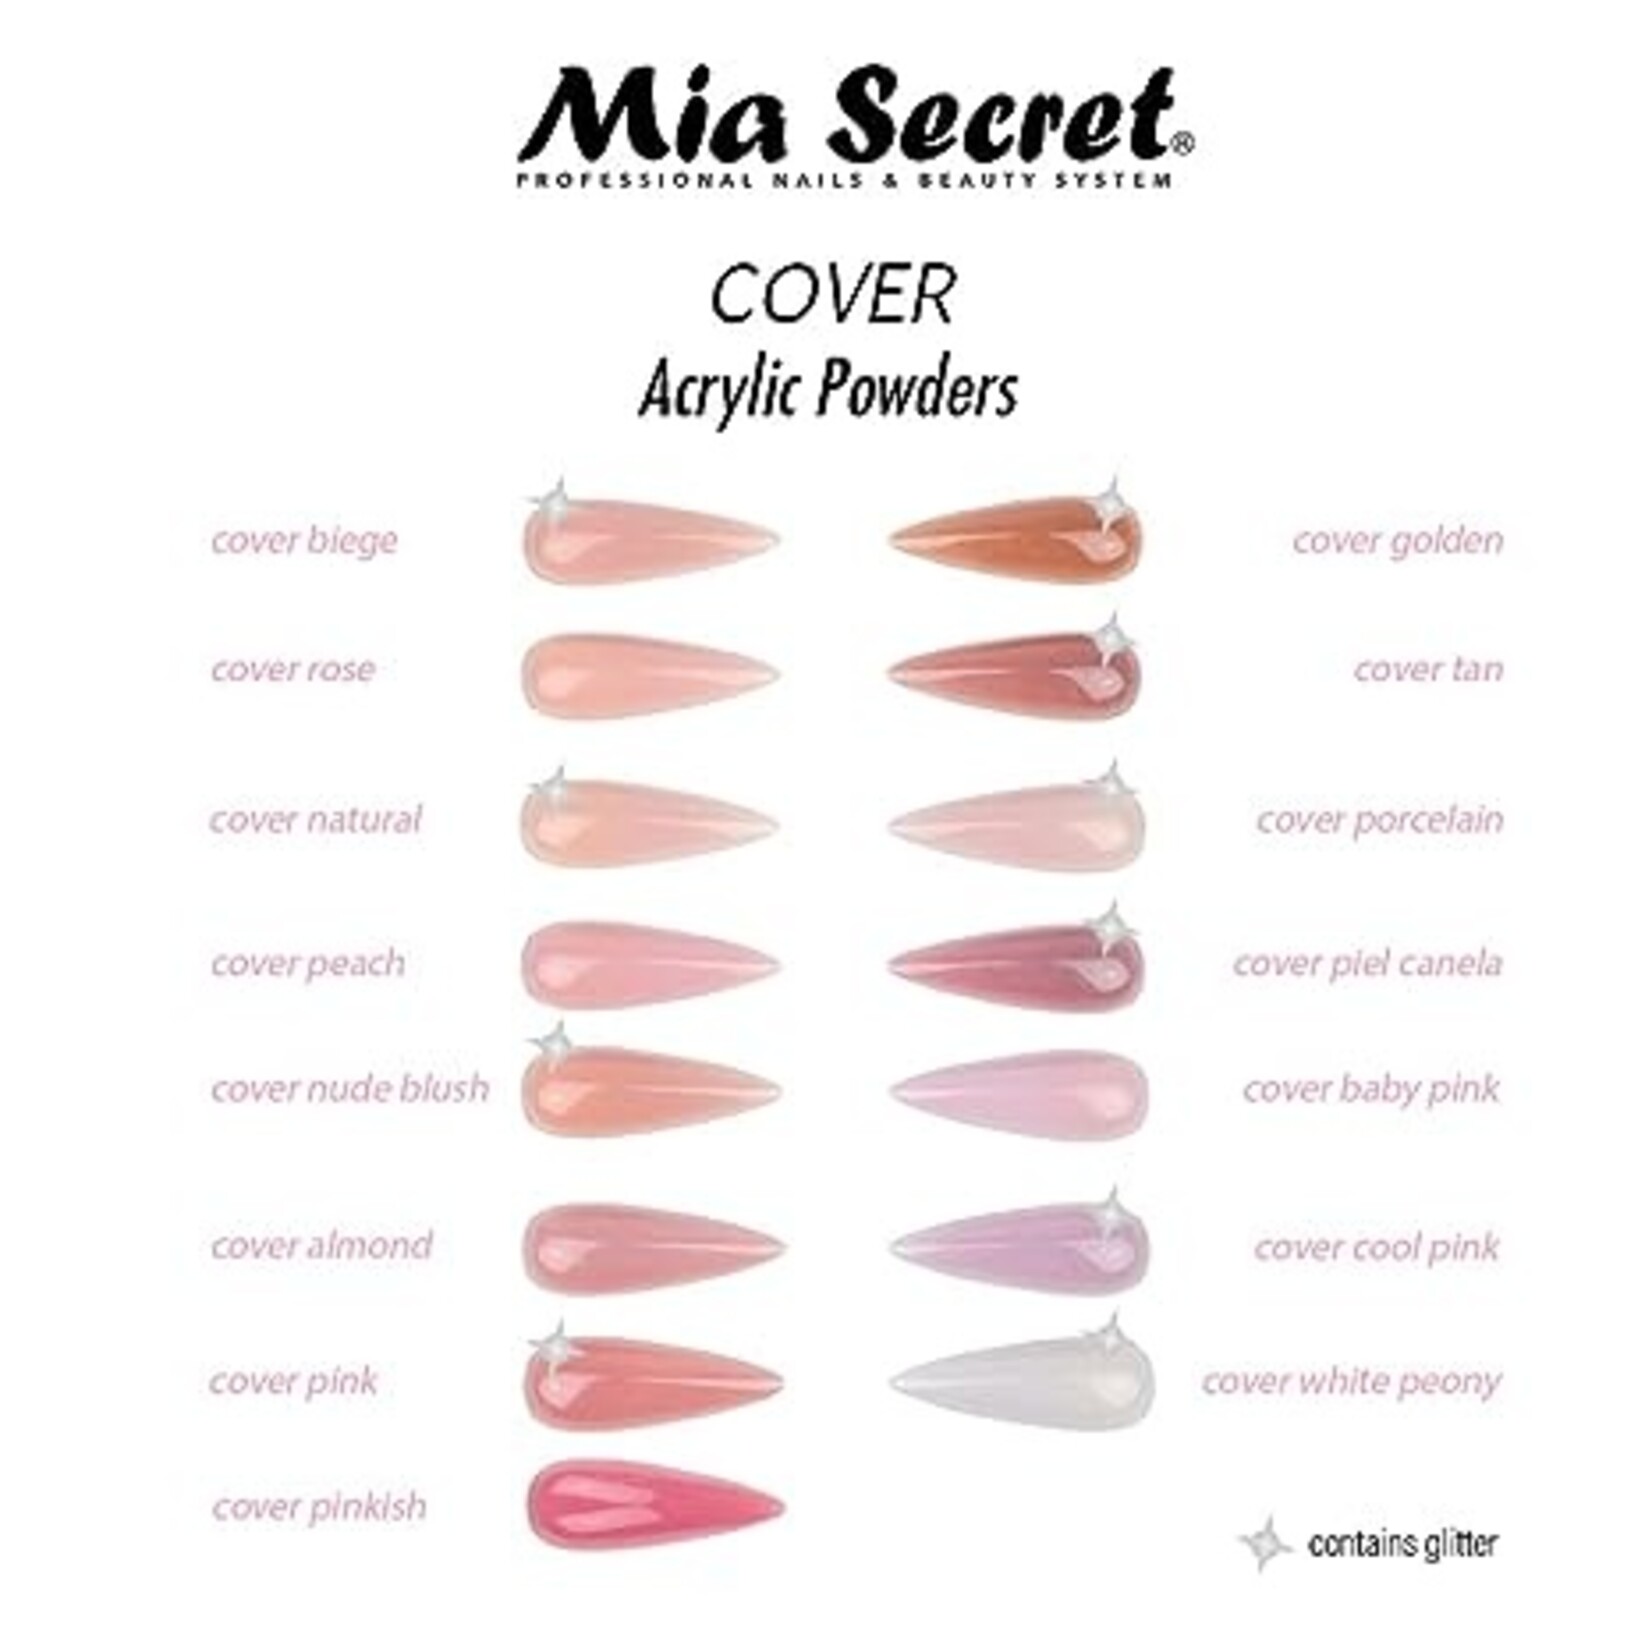 Mia Secret Mia Secret - Acrylic Powder - Cover Pinkish - 2.0 oz